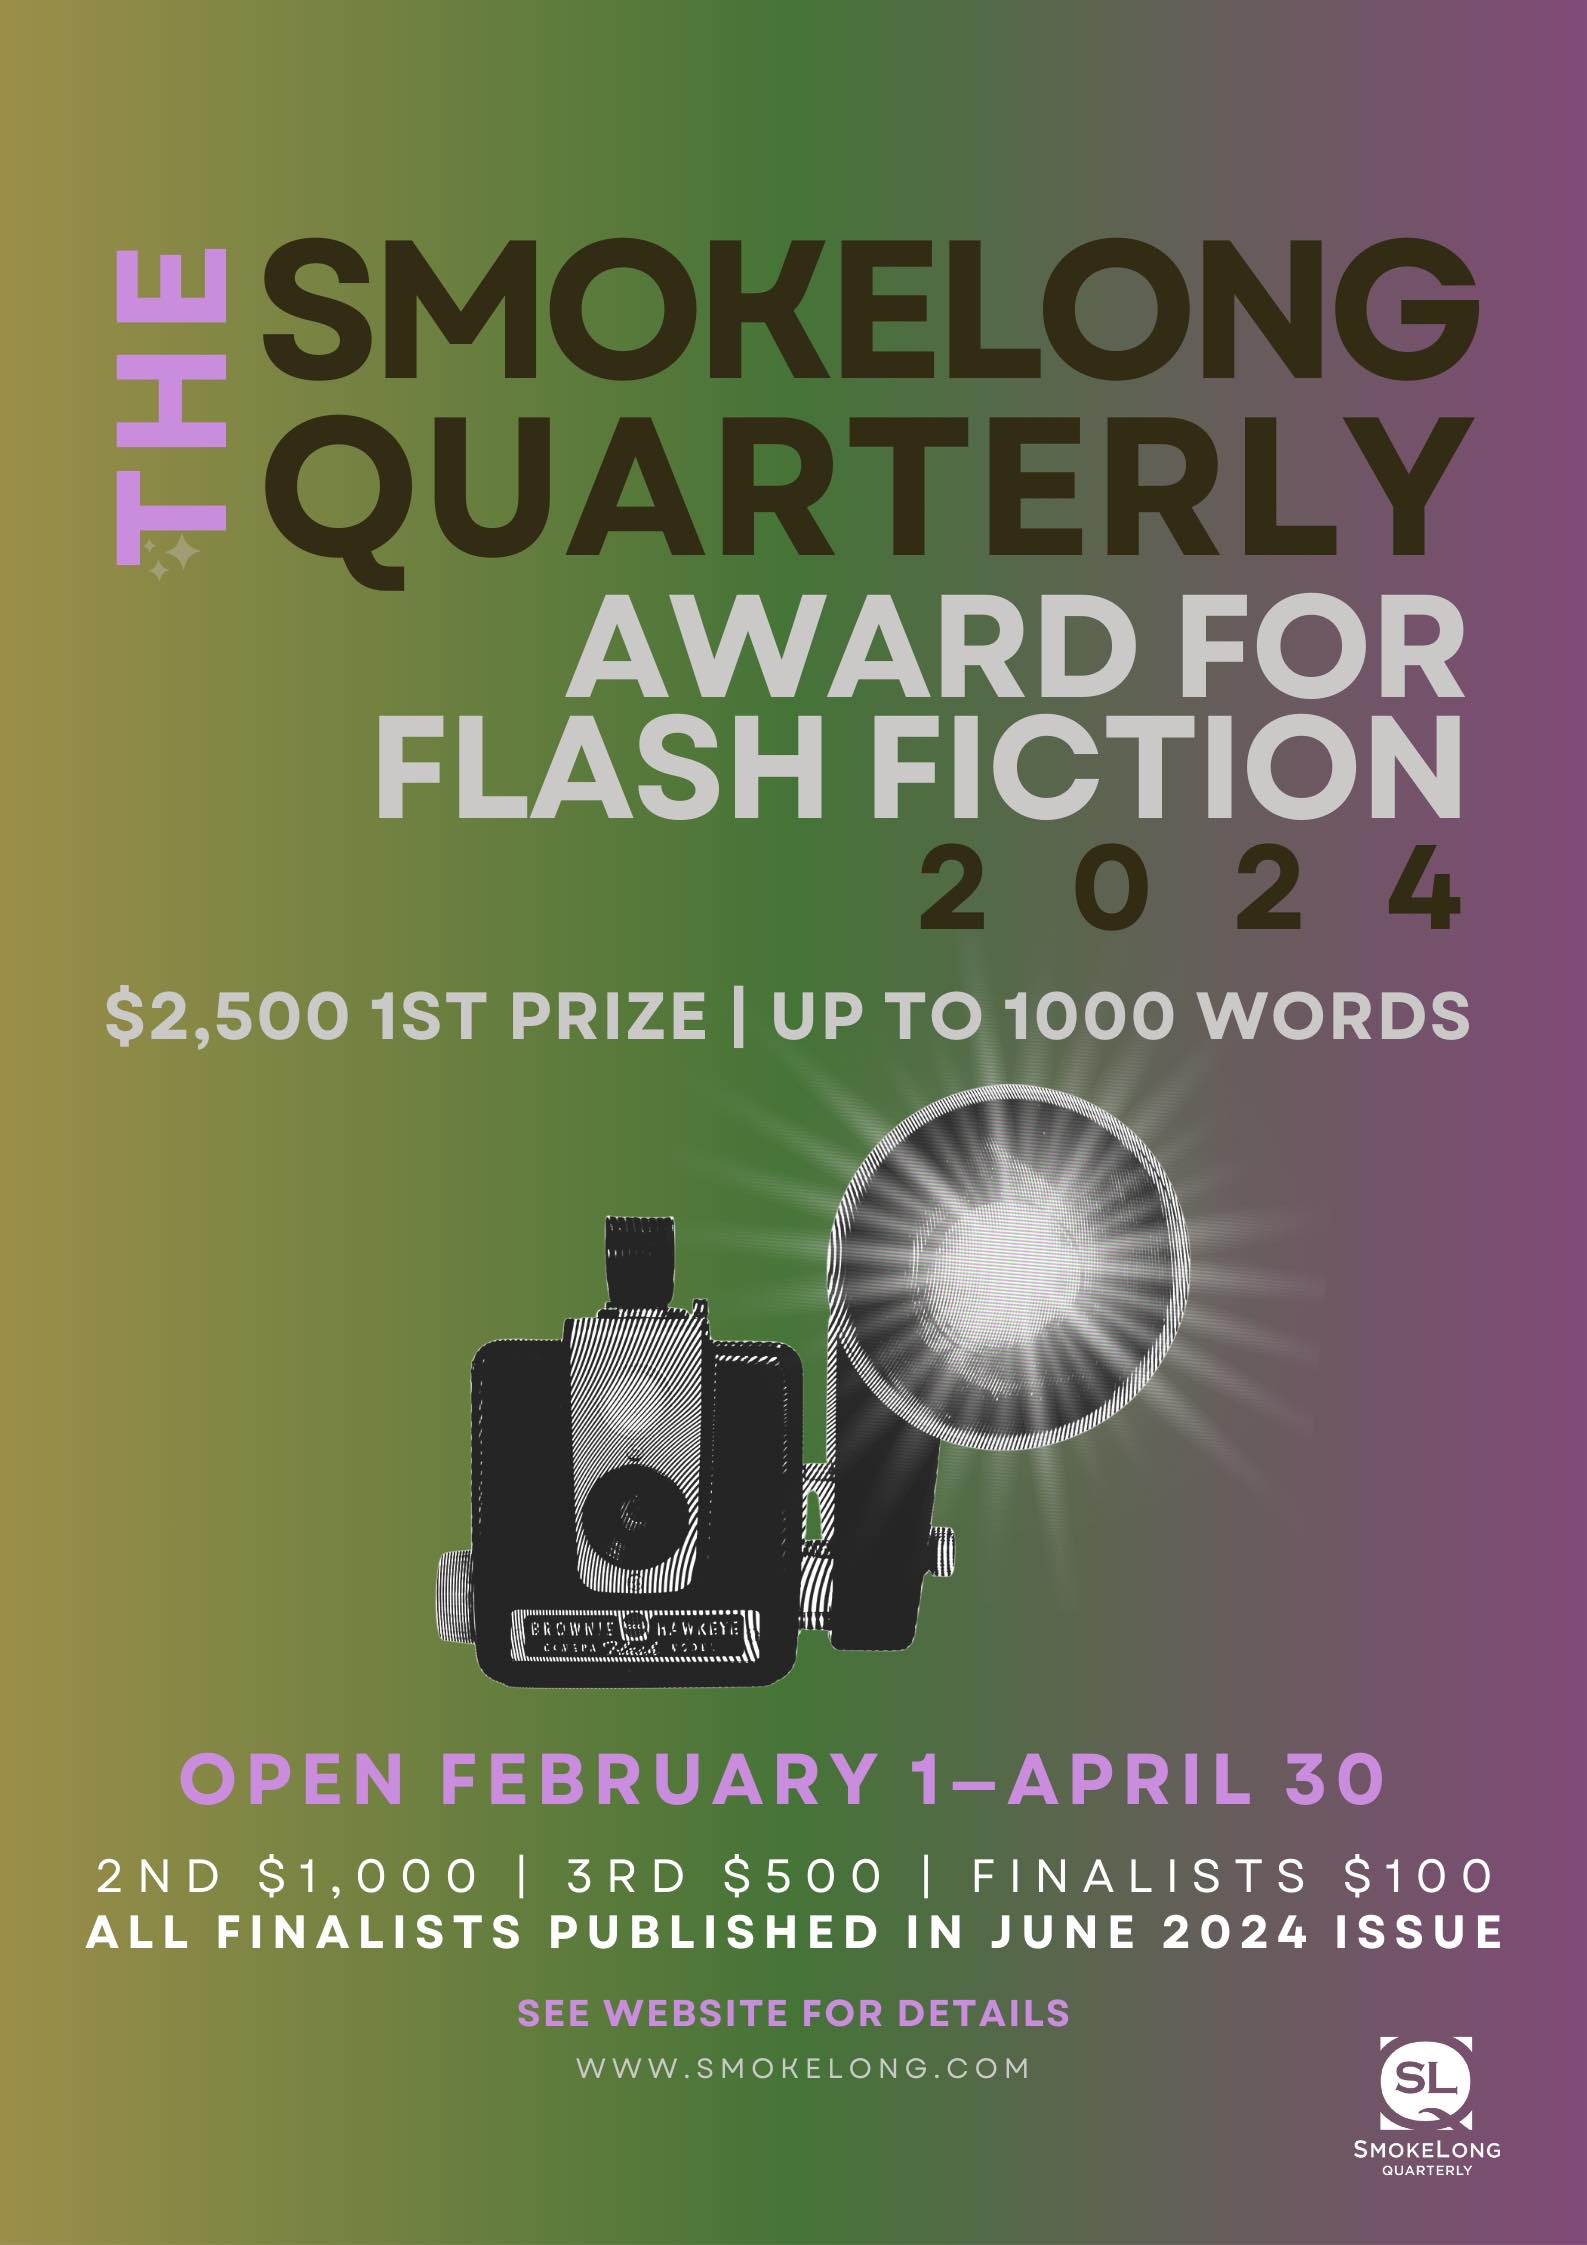 The SmokeLong Quarterly Award for Flash Fiction